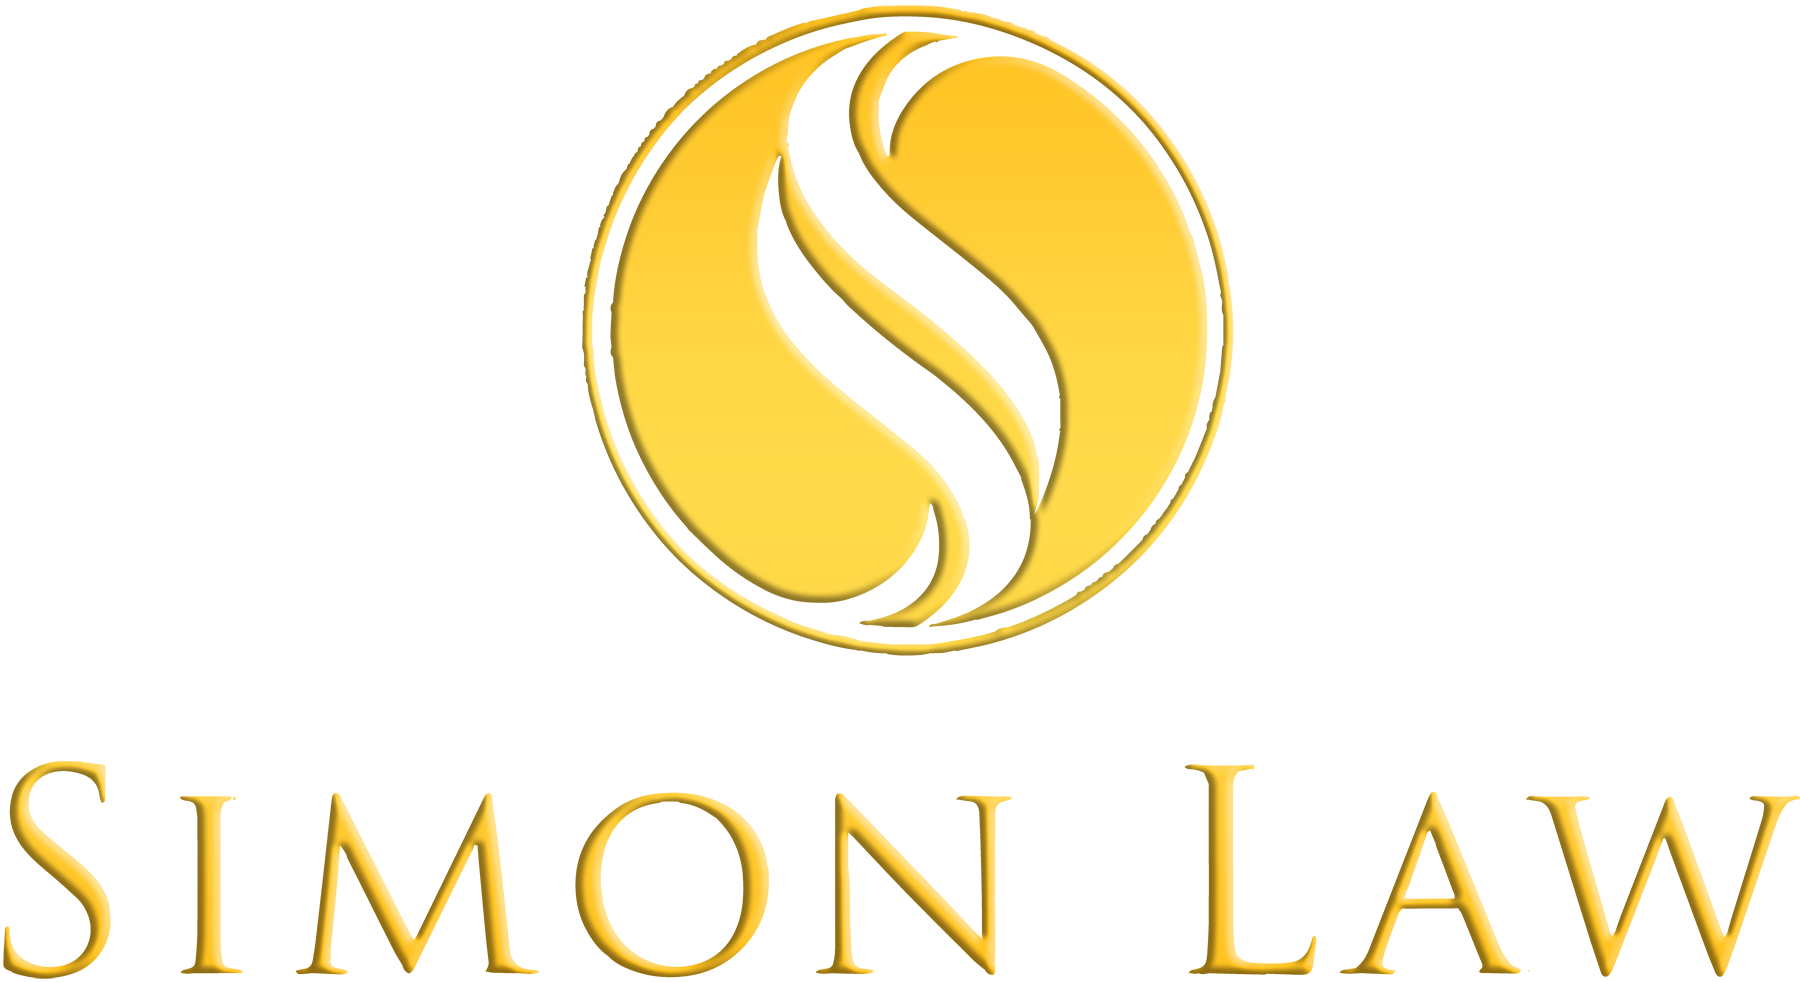 Simon-Law-logo-gold-bevelsm